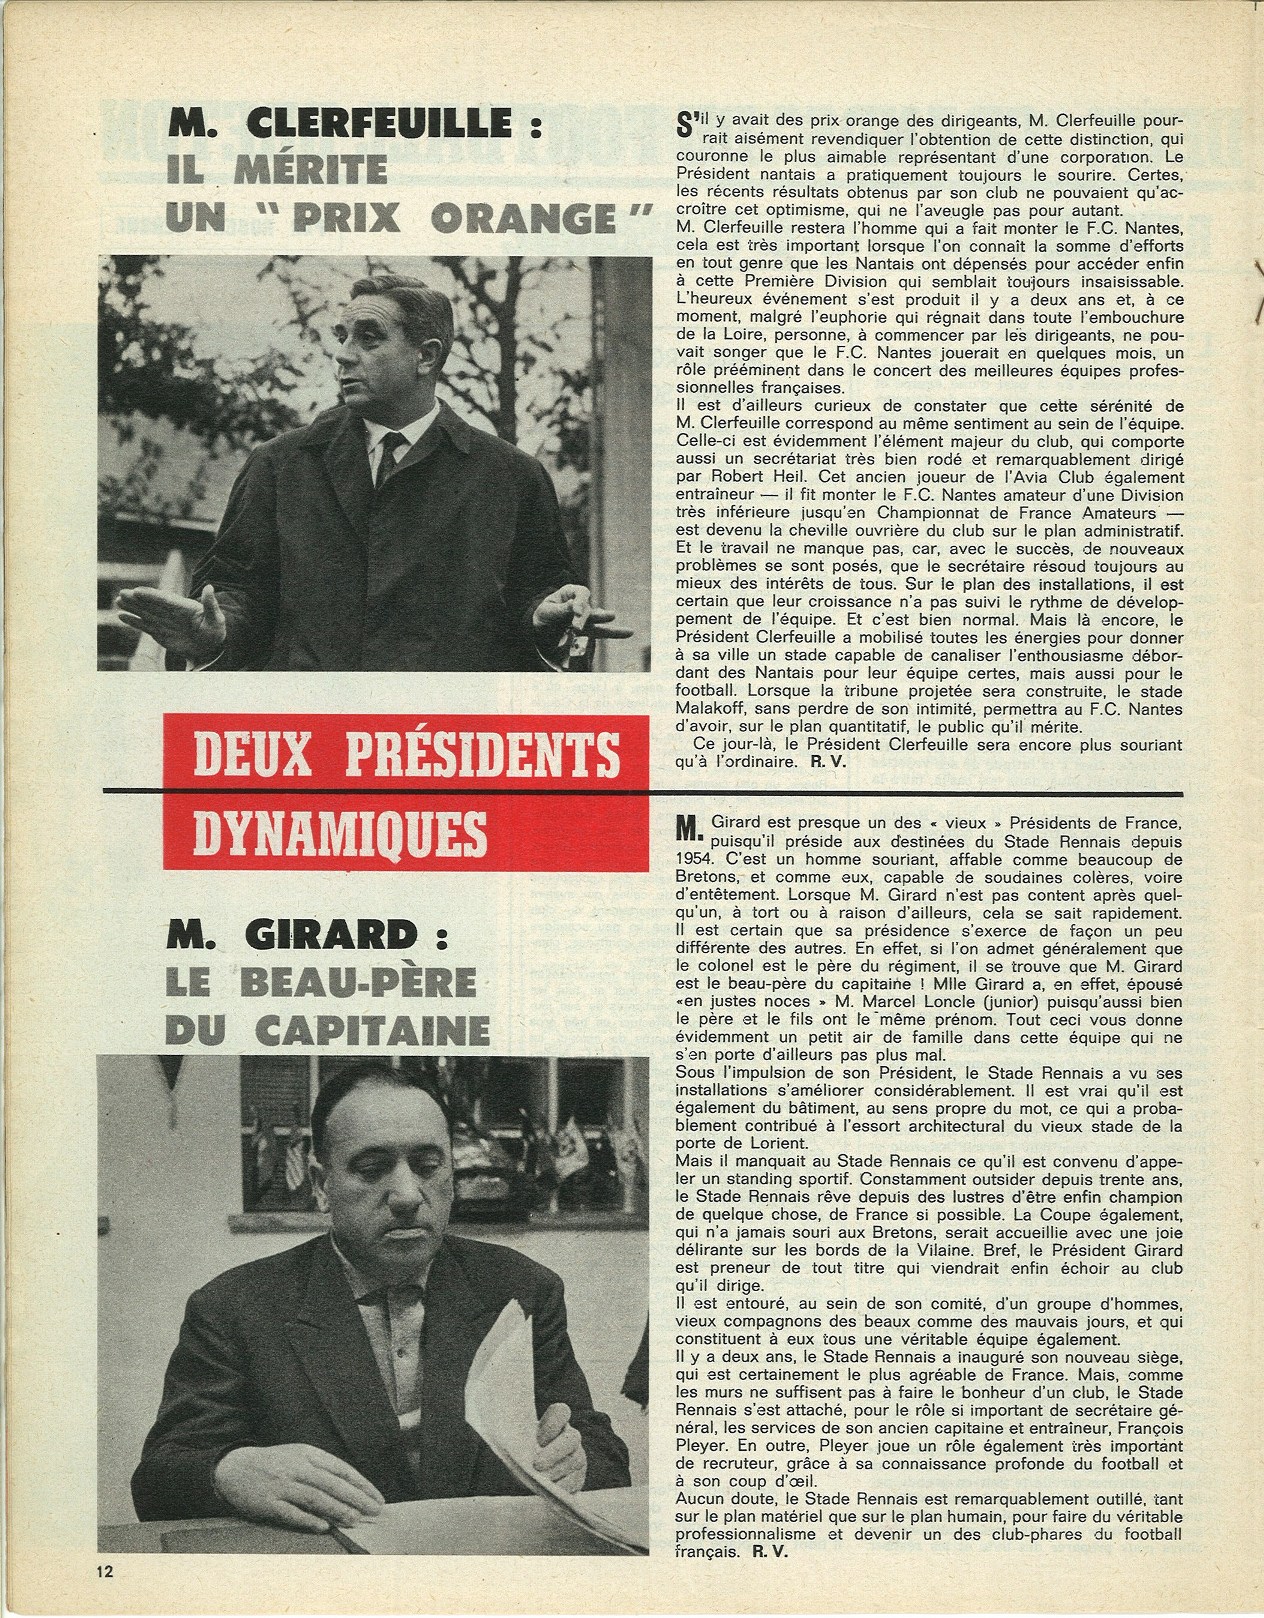 Page 12 - 2 présidents dynamiques, Clerfeuille & Girard.jpg